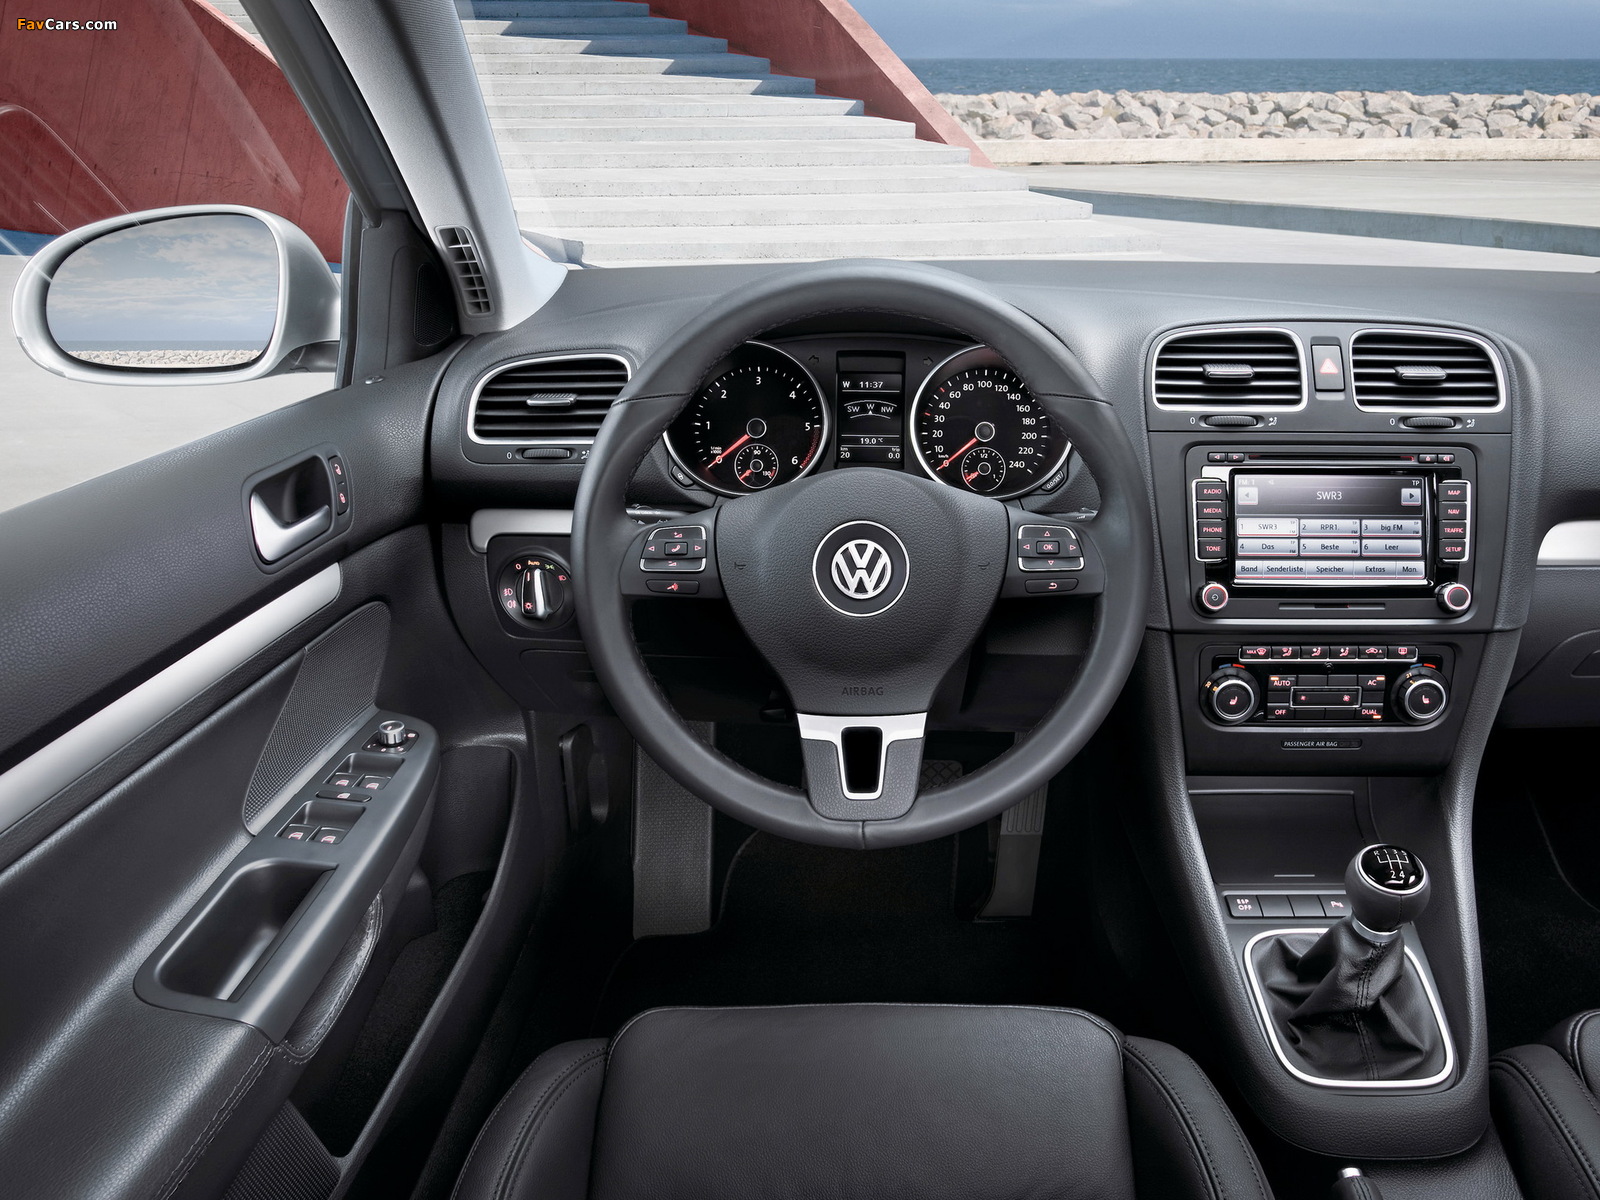 Volkswagen Golf Variant (Typ 5K) 2009 images (1600 x 1200)